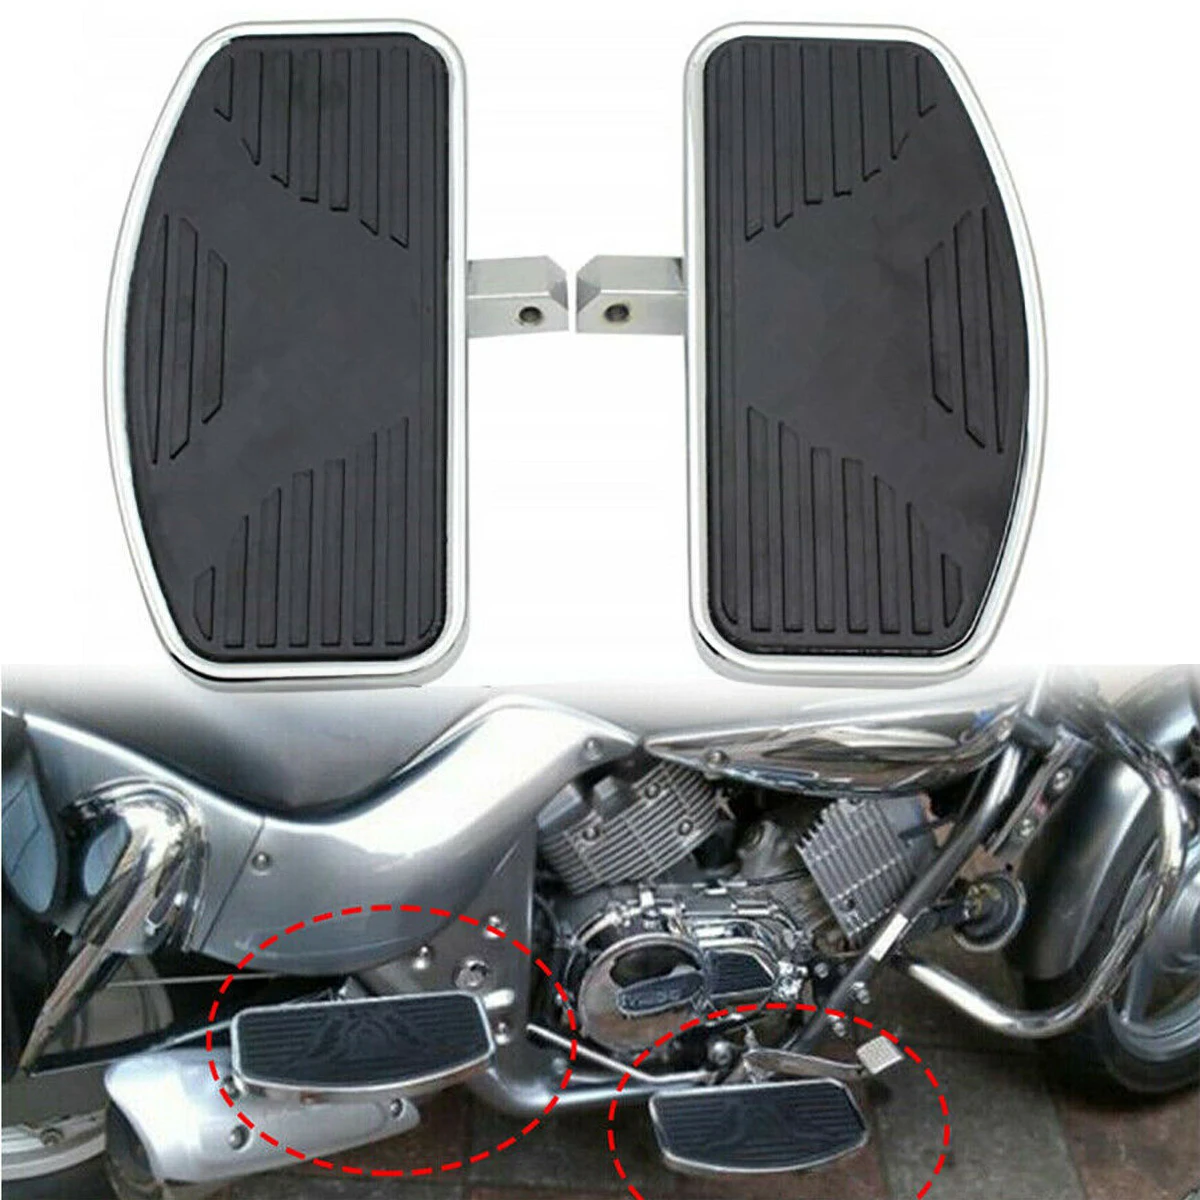 Chrome Foot Rider Driver Footrest Floorboards For Honda Shadow VTX 1300 ... - $62.58